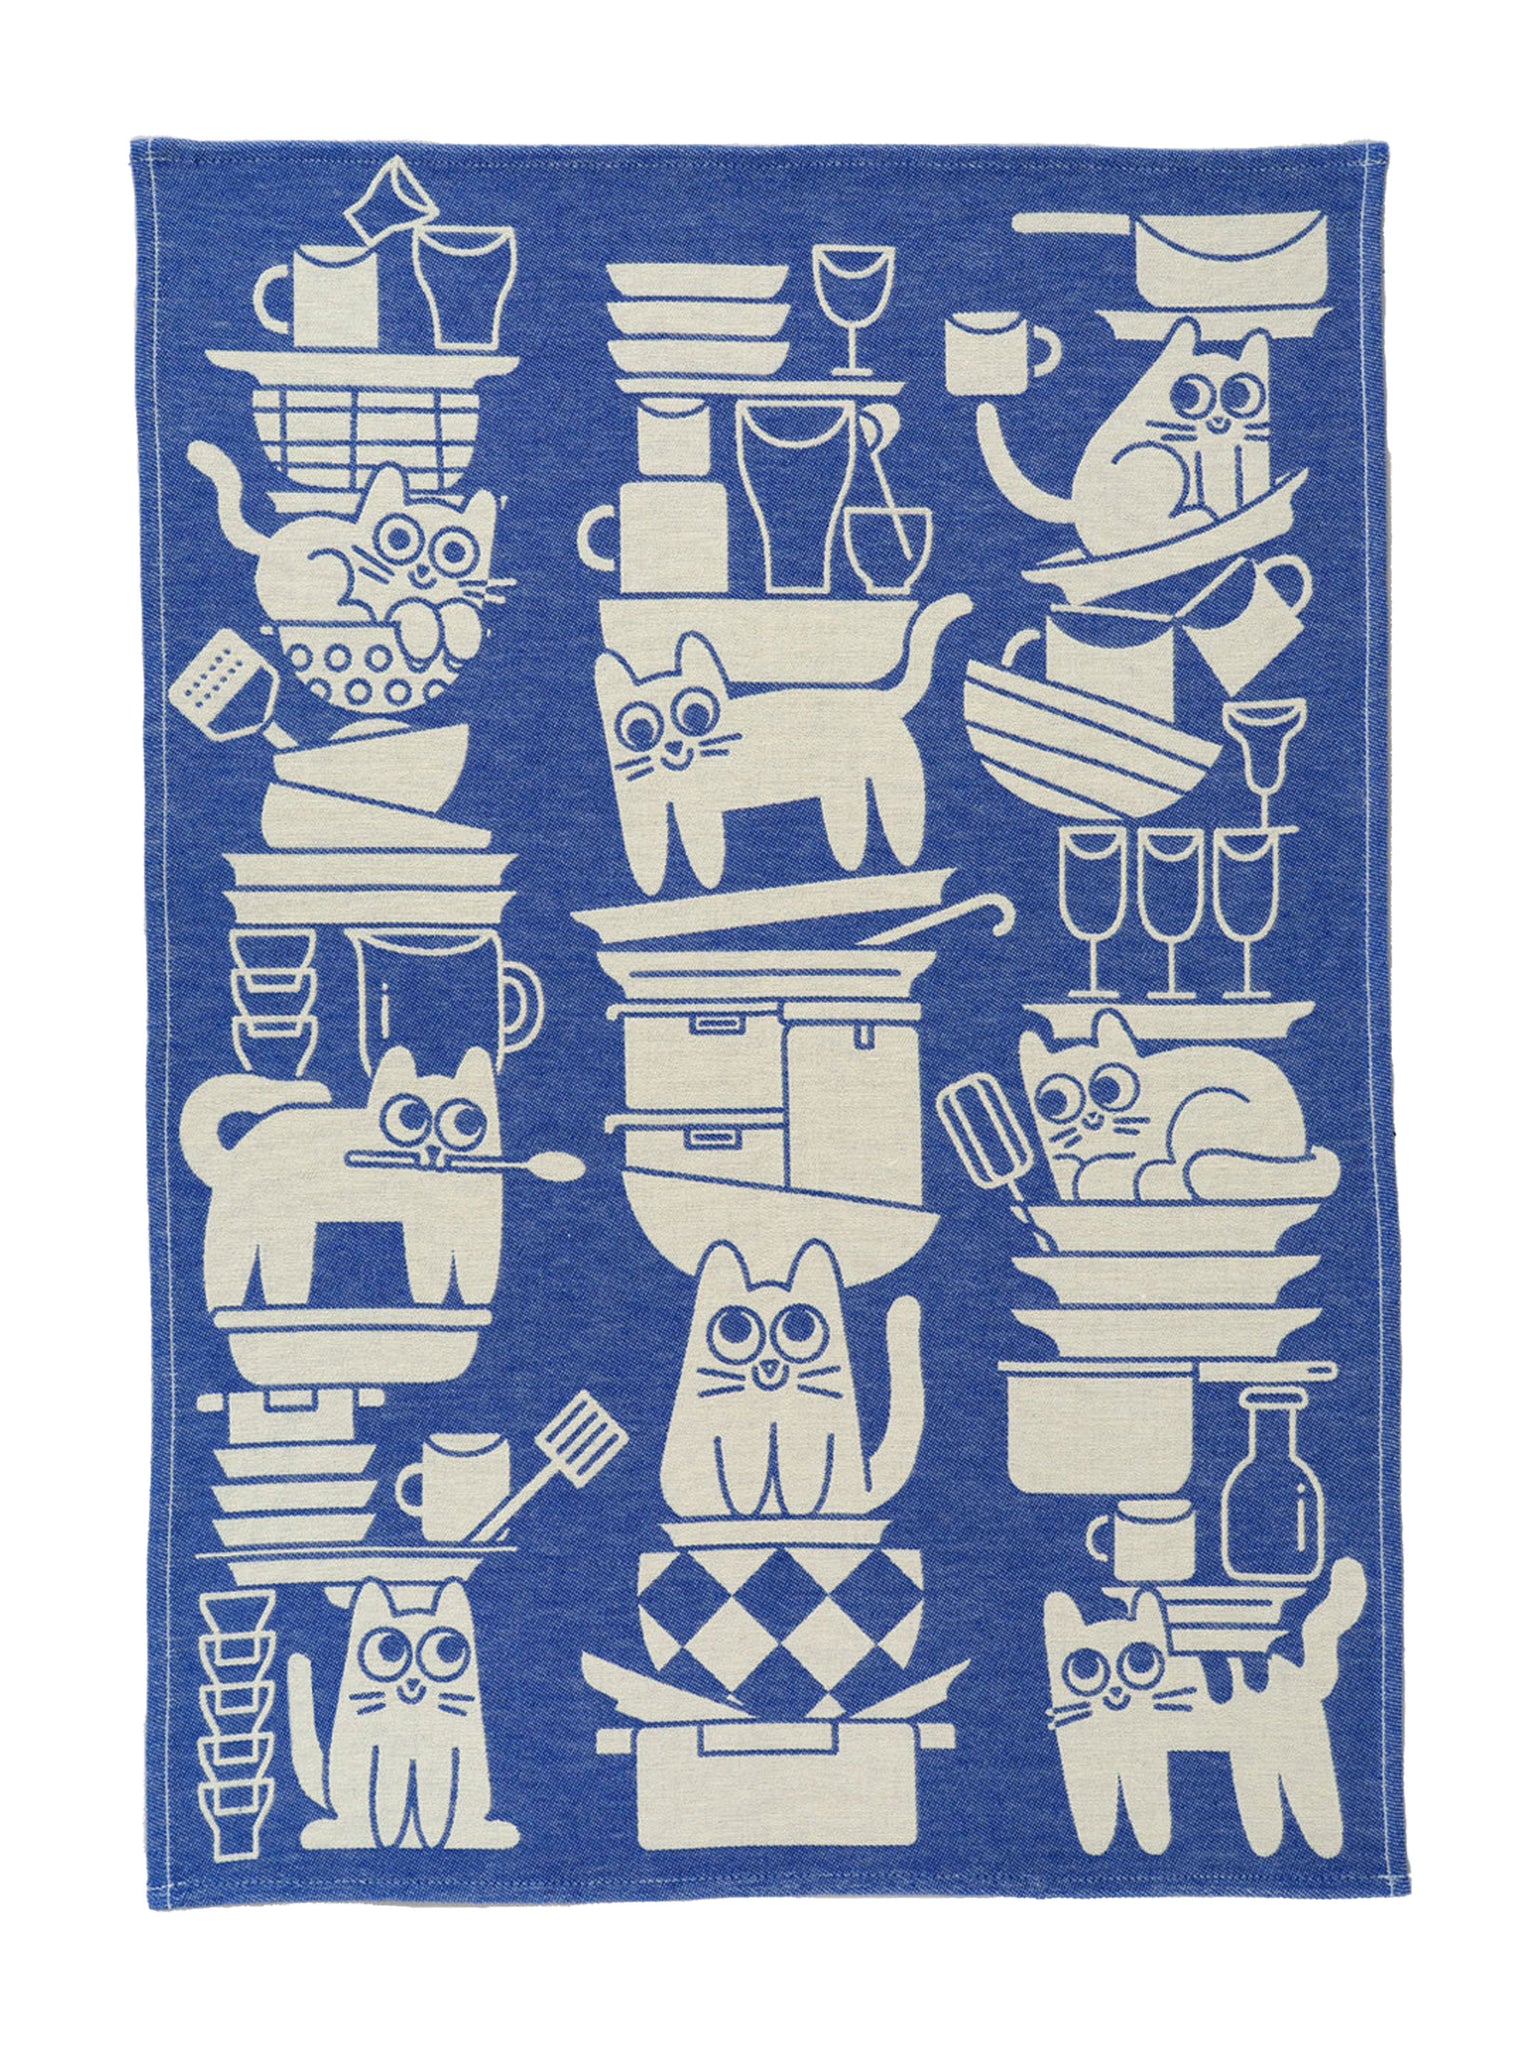 Blue and white cat illustrated tea towel by Elliott Kruszynski for Wrap Magazine